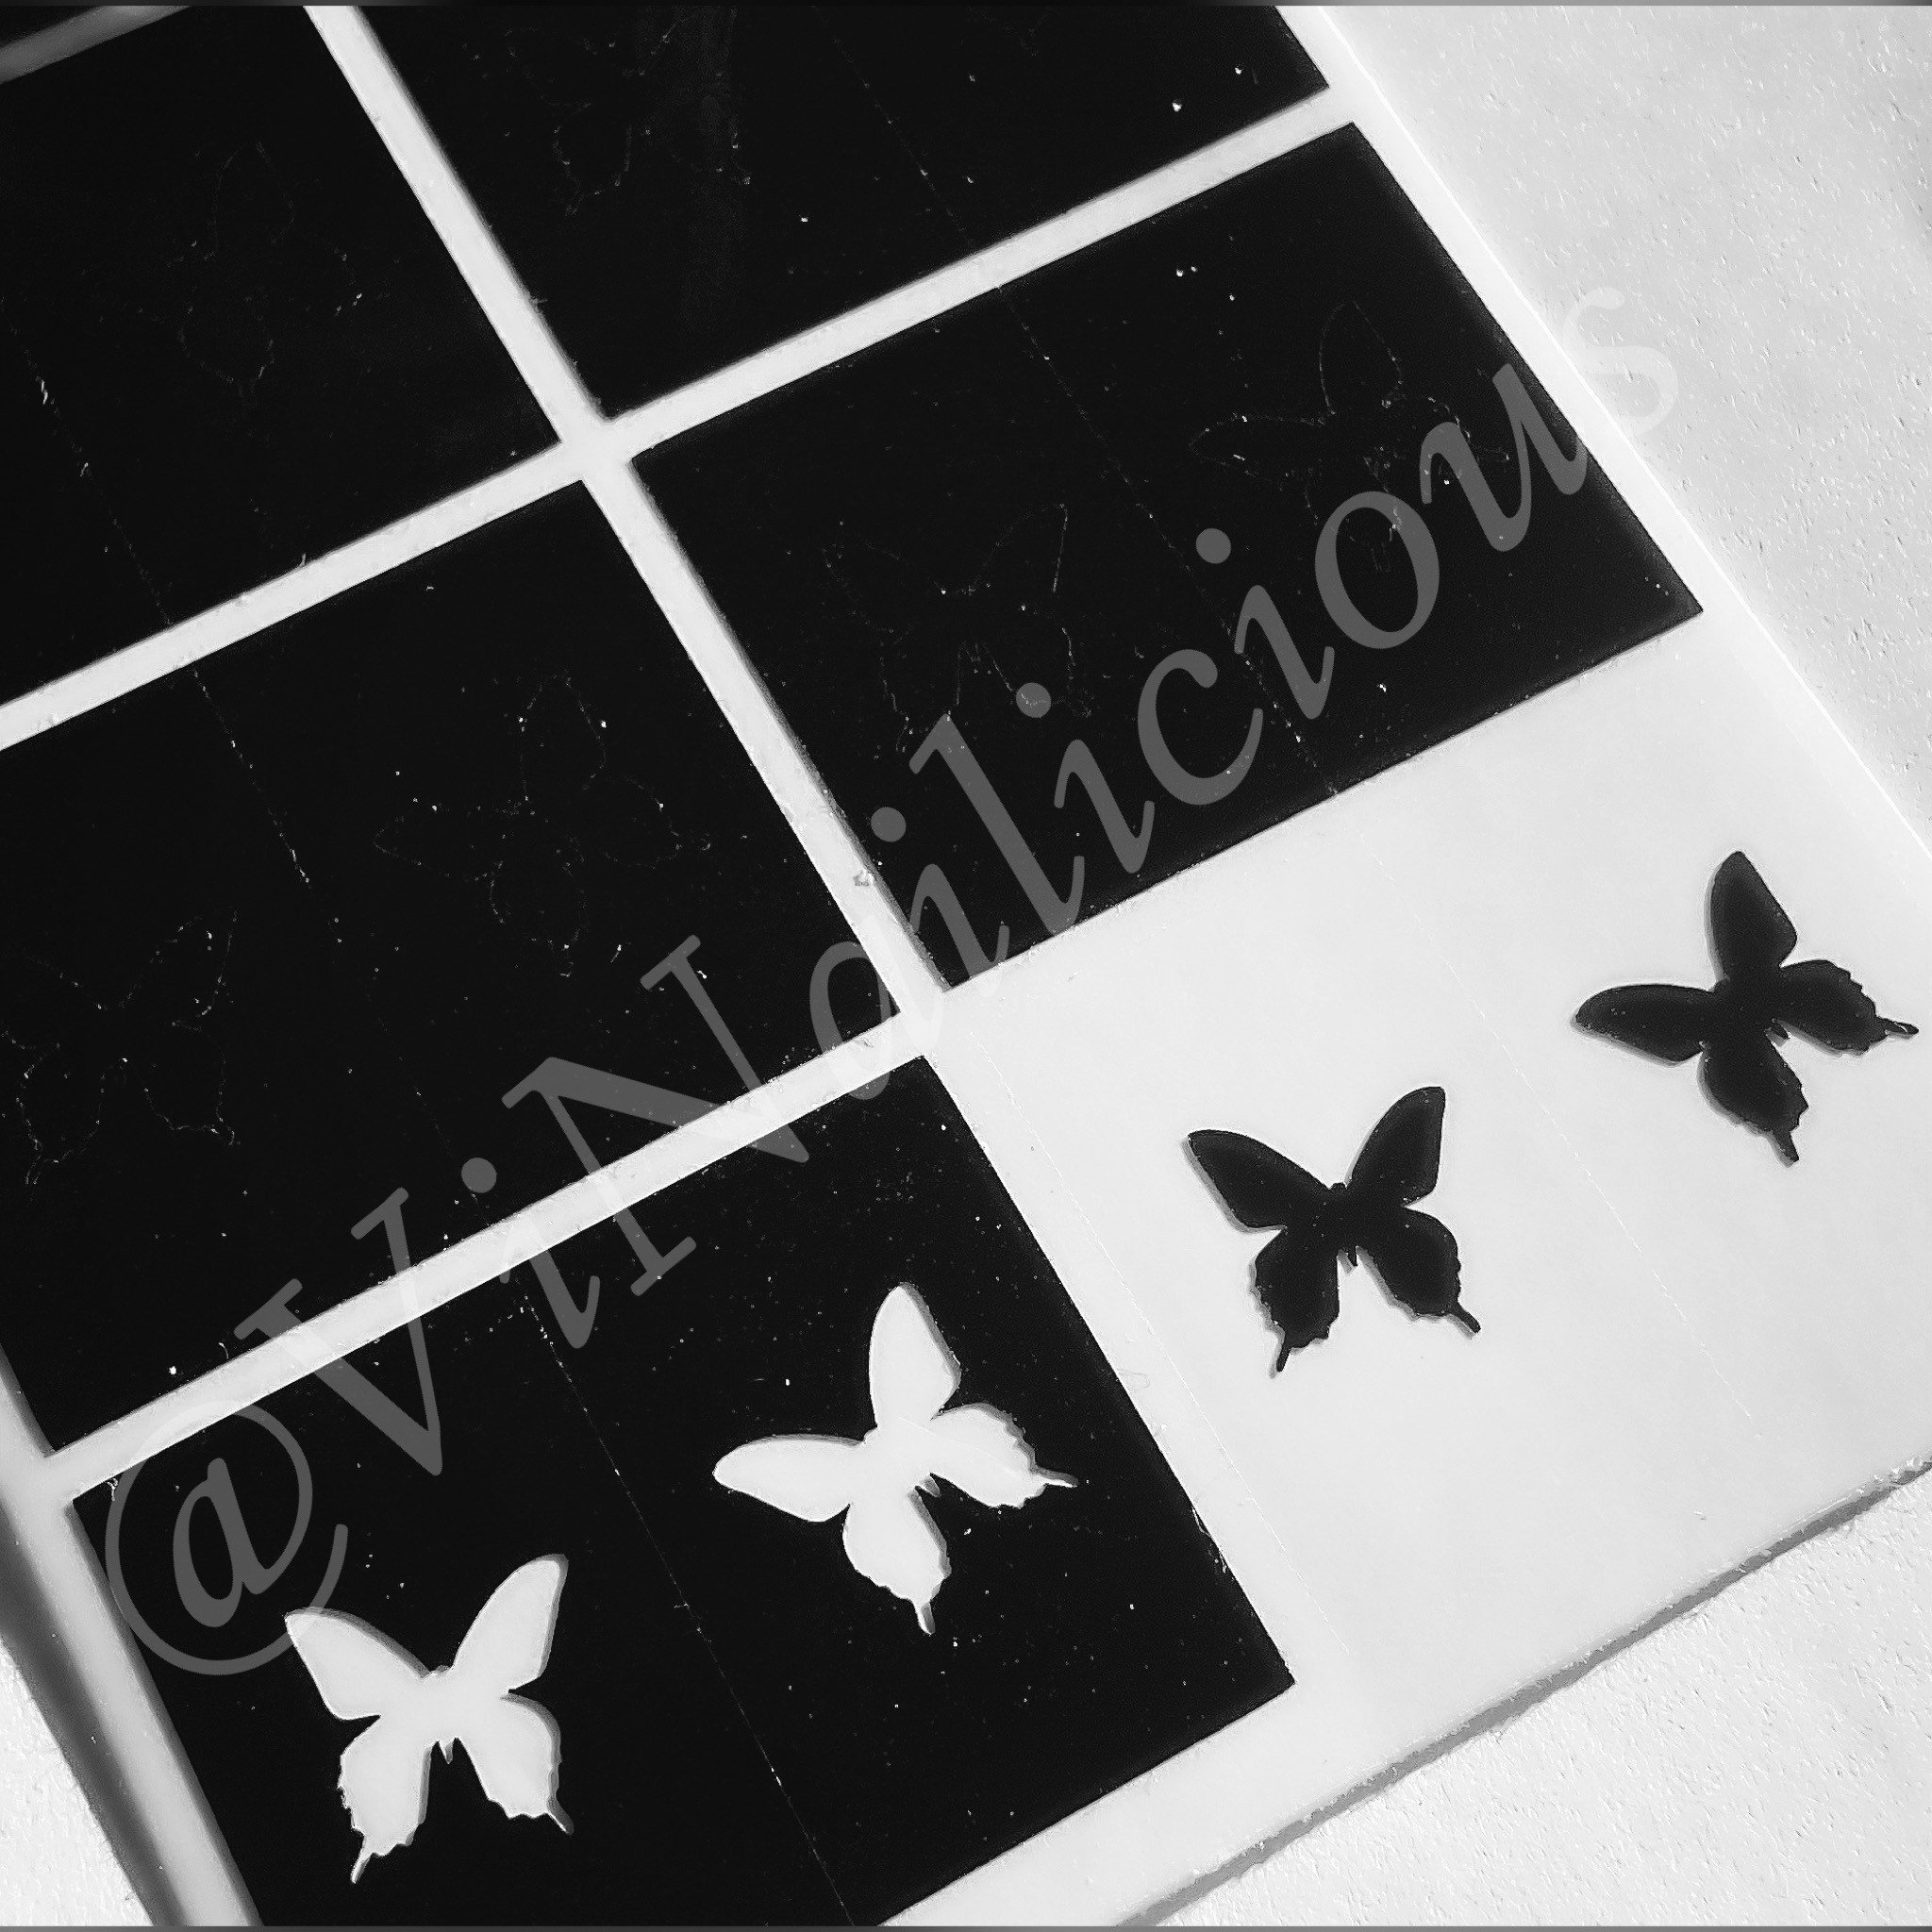 Airbrush Nail Art Stencils Sticker Love Heart Butterfly Number